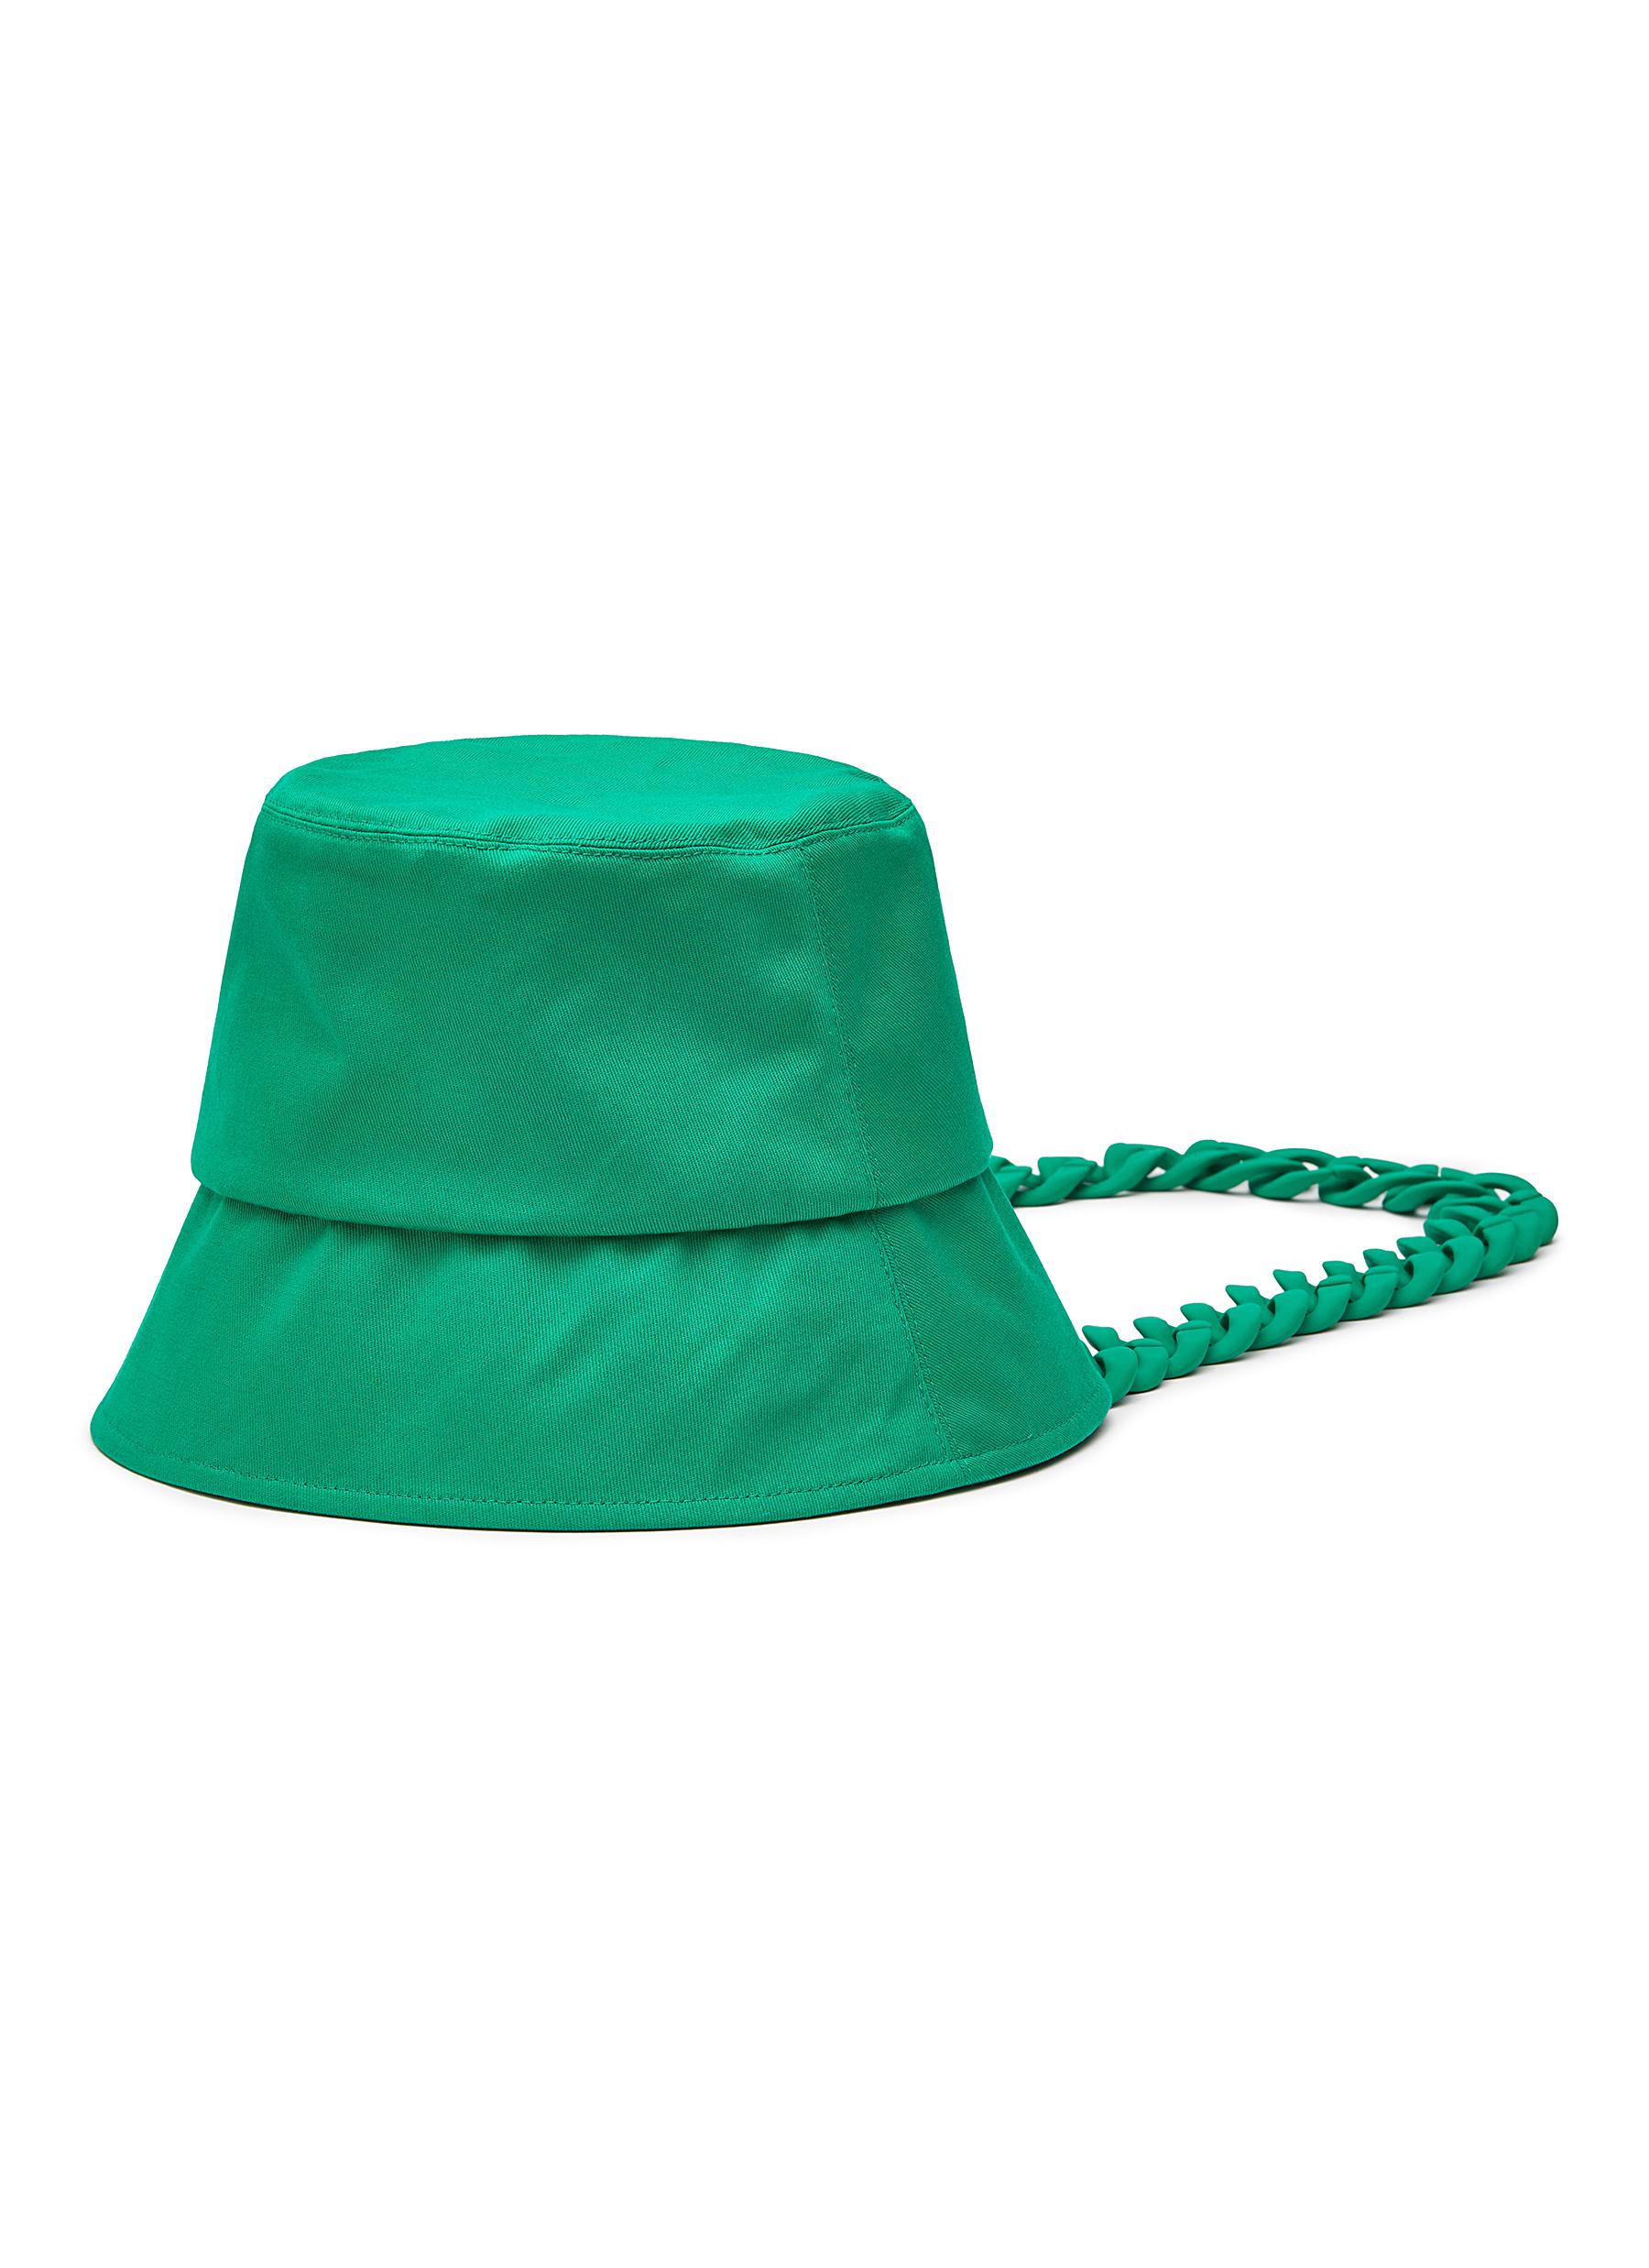 EUGENIA KIM ‘Yuki' Chain Embellished Bucket Hat